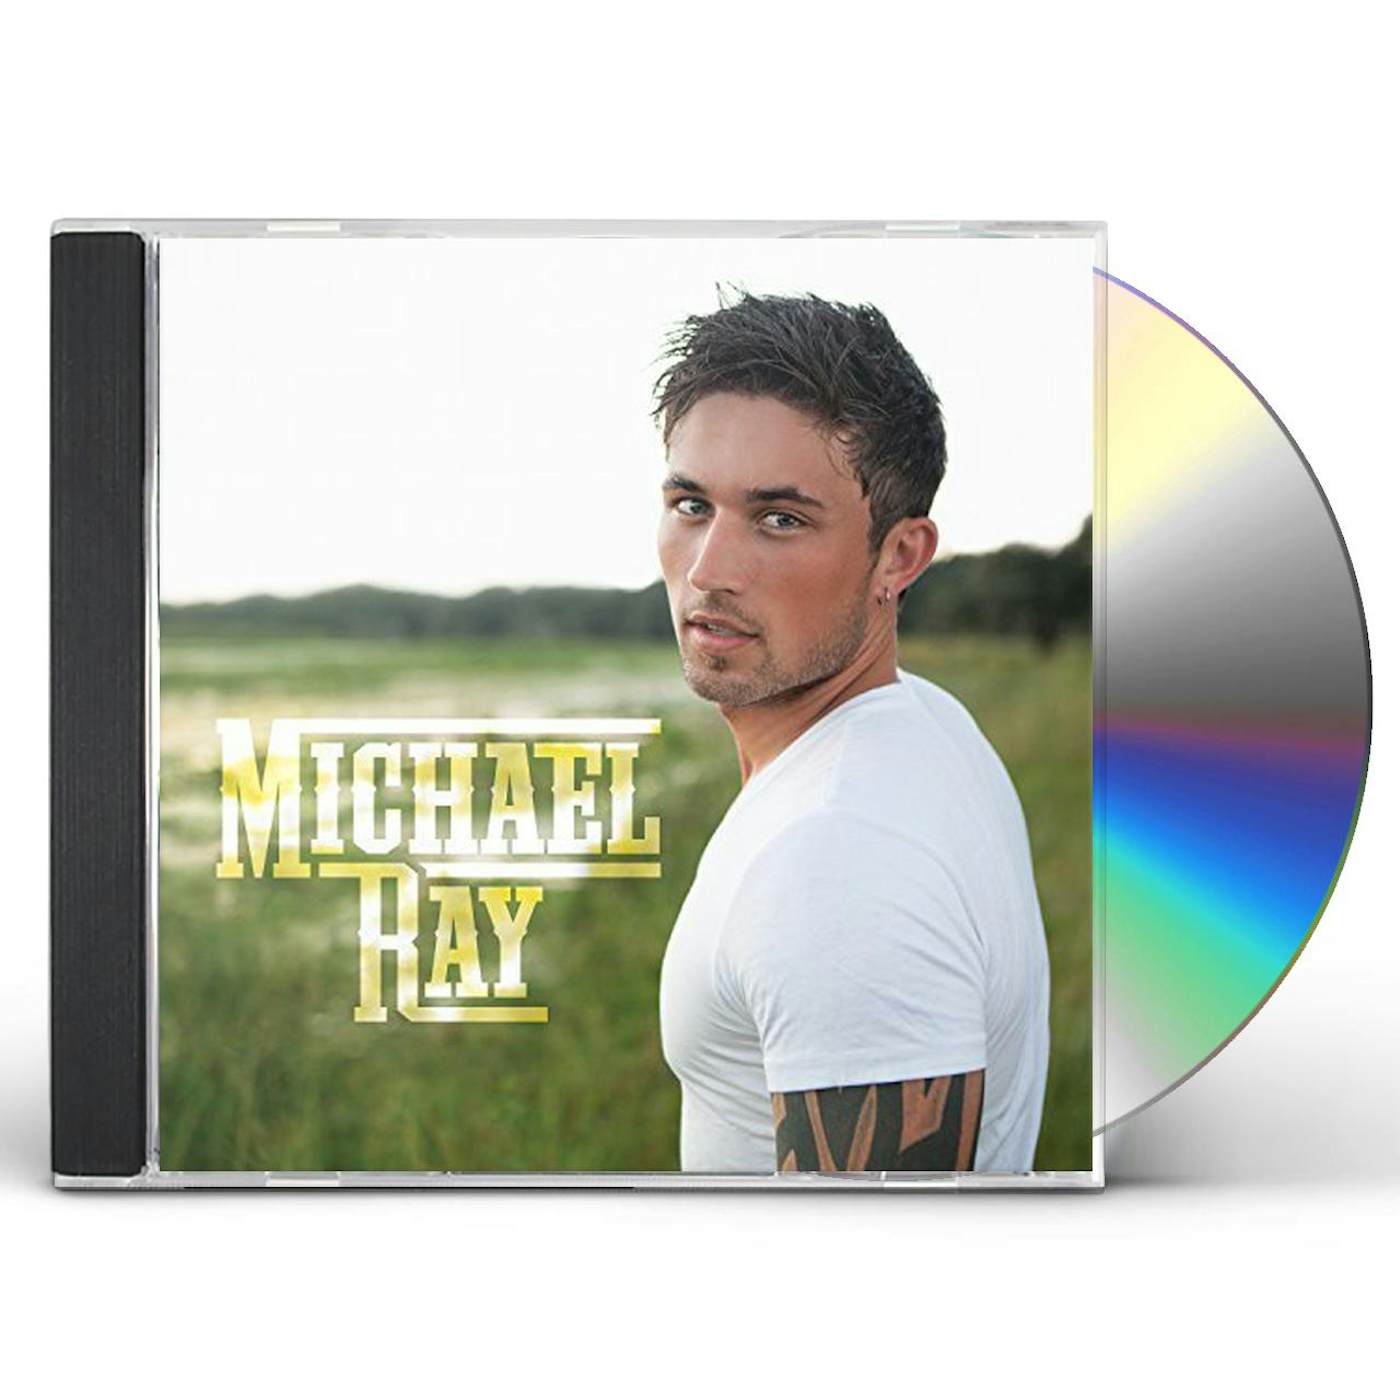 MICHAEL RAY CD